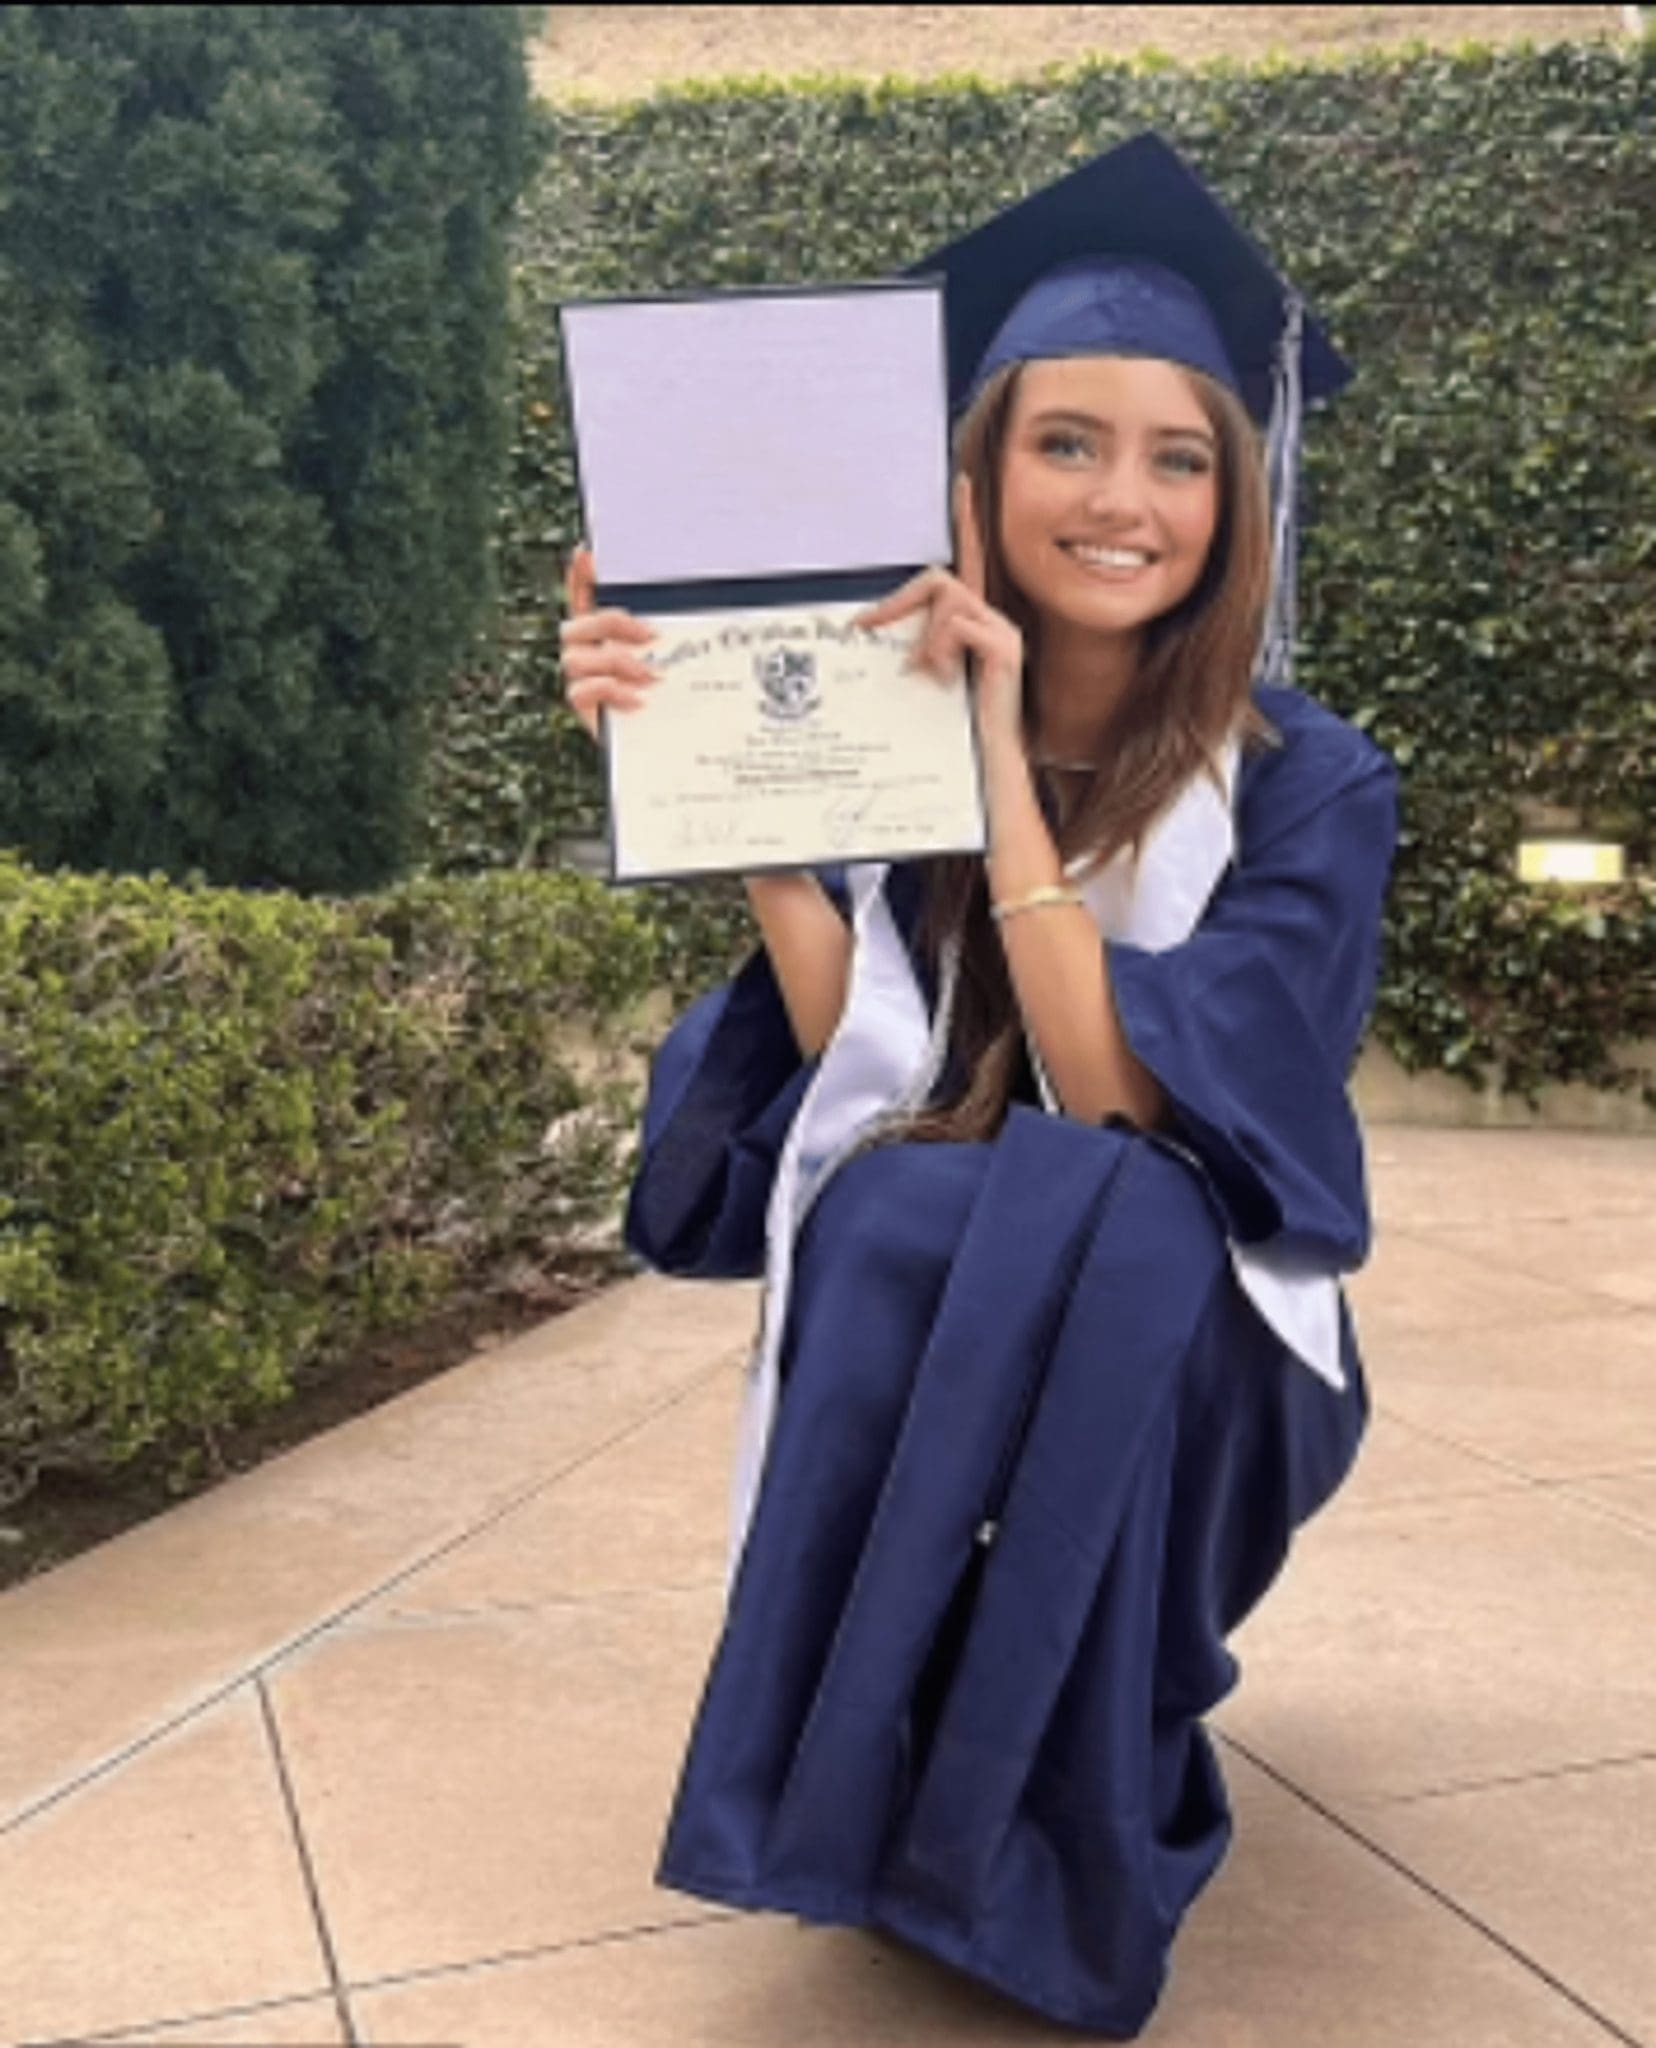 Supermodel Heidi Klum shares footage from her daughter's graduation